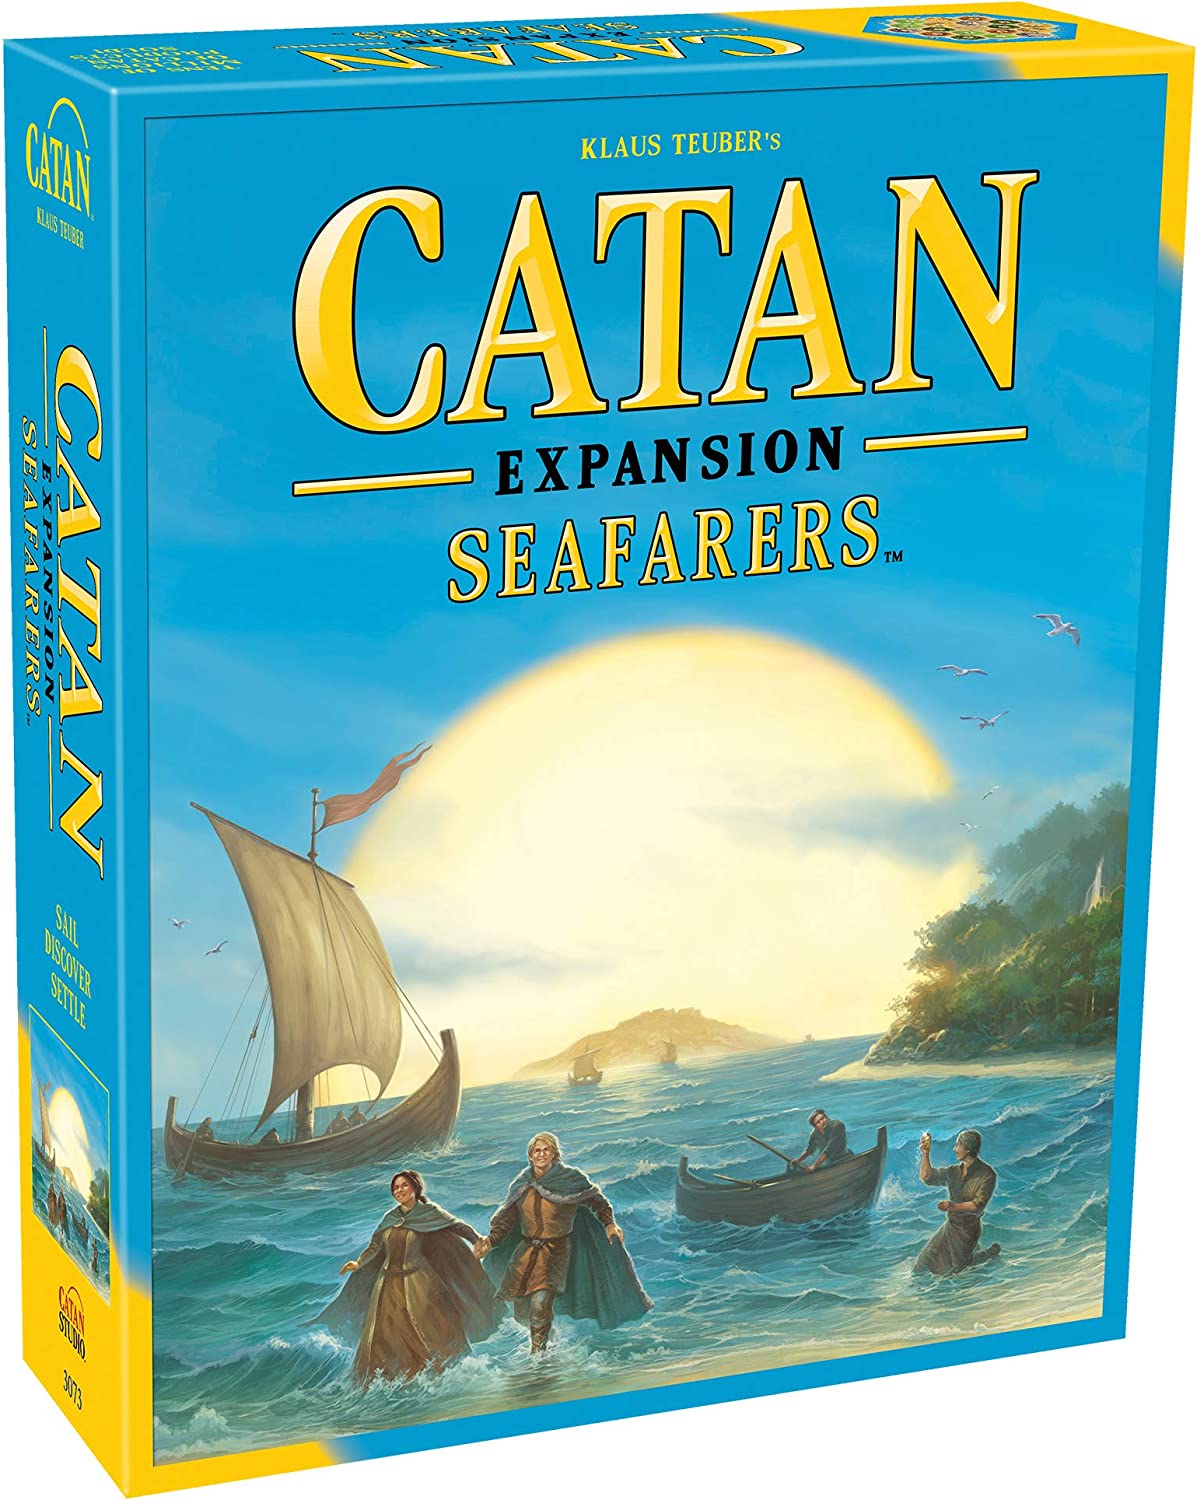 Catan: Seafarers Expansion (5th Edition)